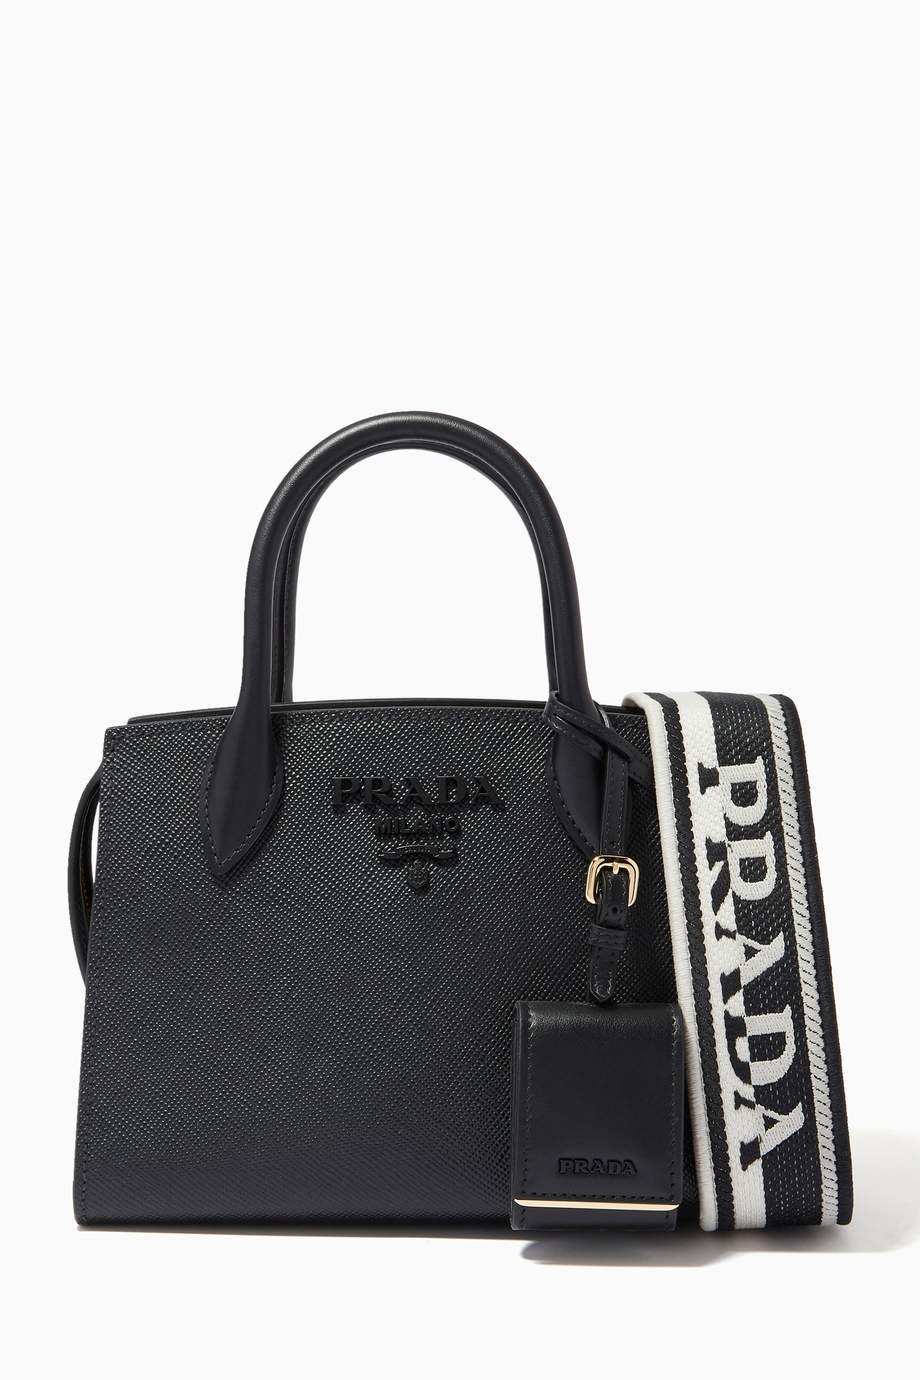 Shop Prada Black Mini Monochrome Bag in Saffiano Leather for Women | Ounass UAE